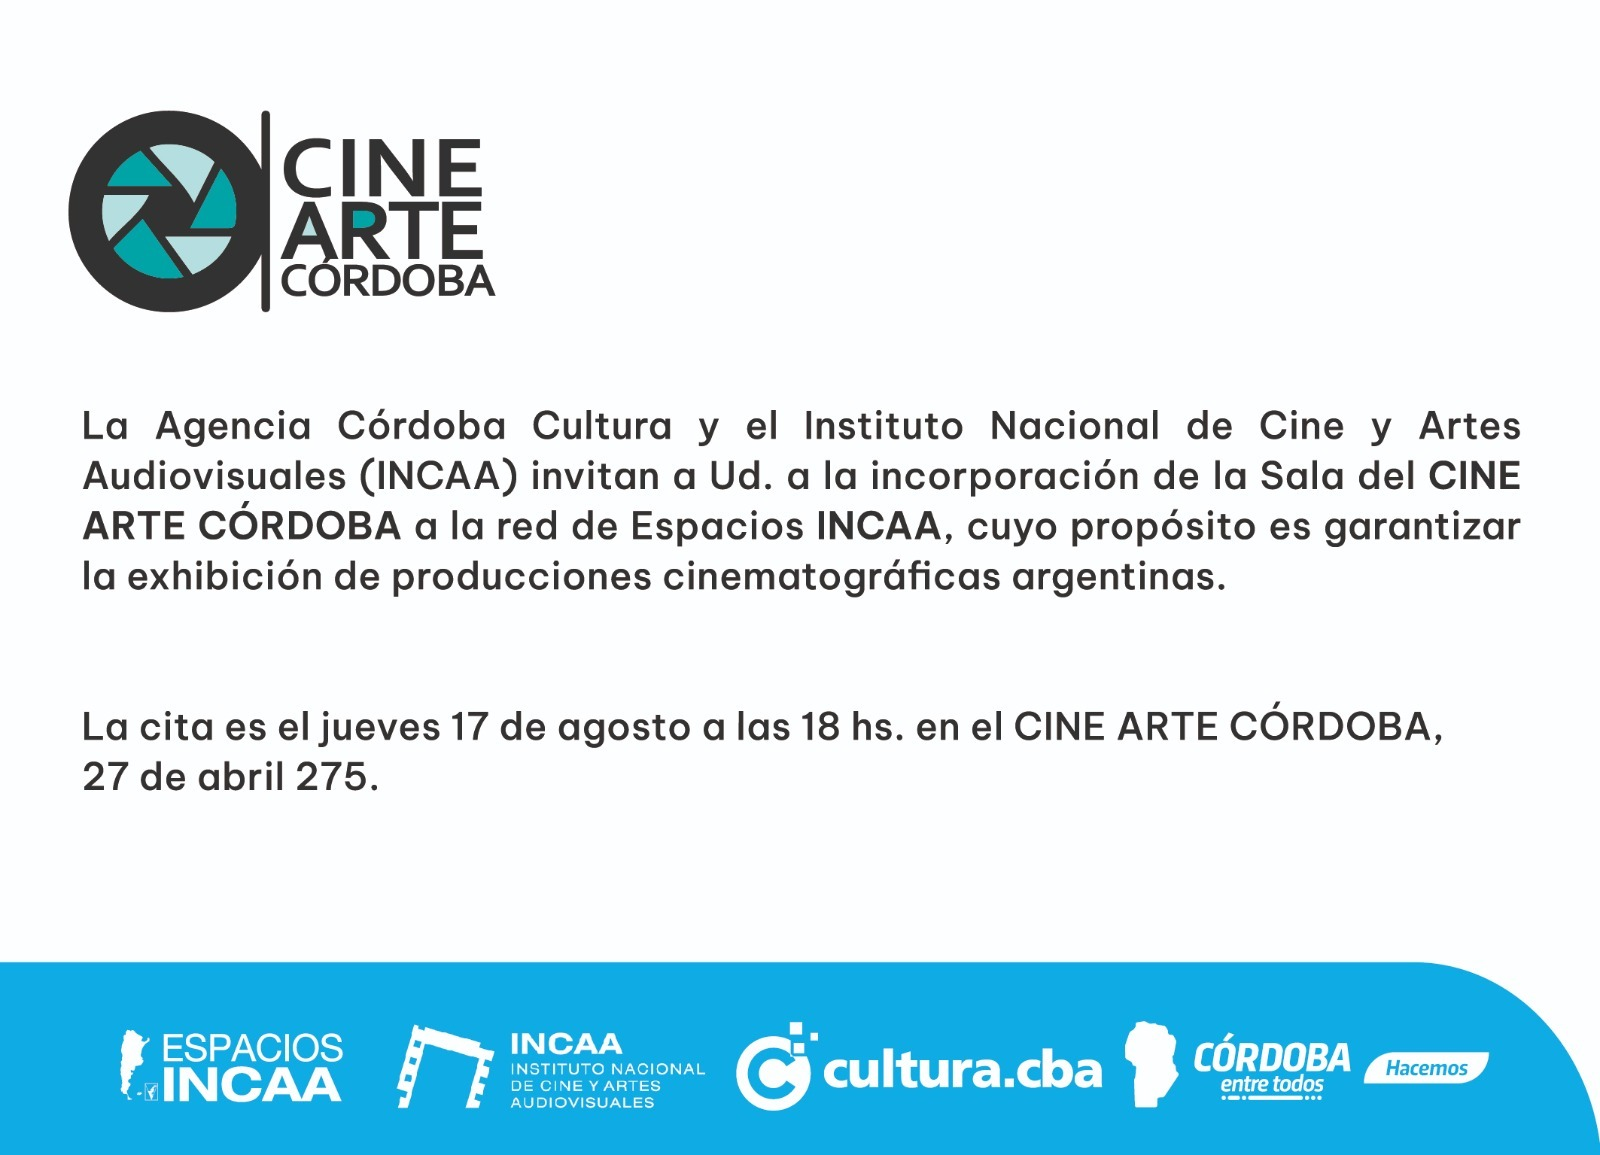 La Sala del Cine Arte Córdoba se incorpora a la red de Espacios INCAA • Canal C